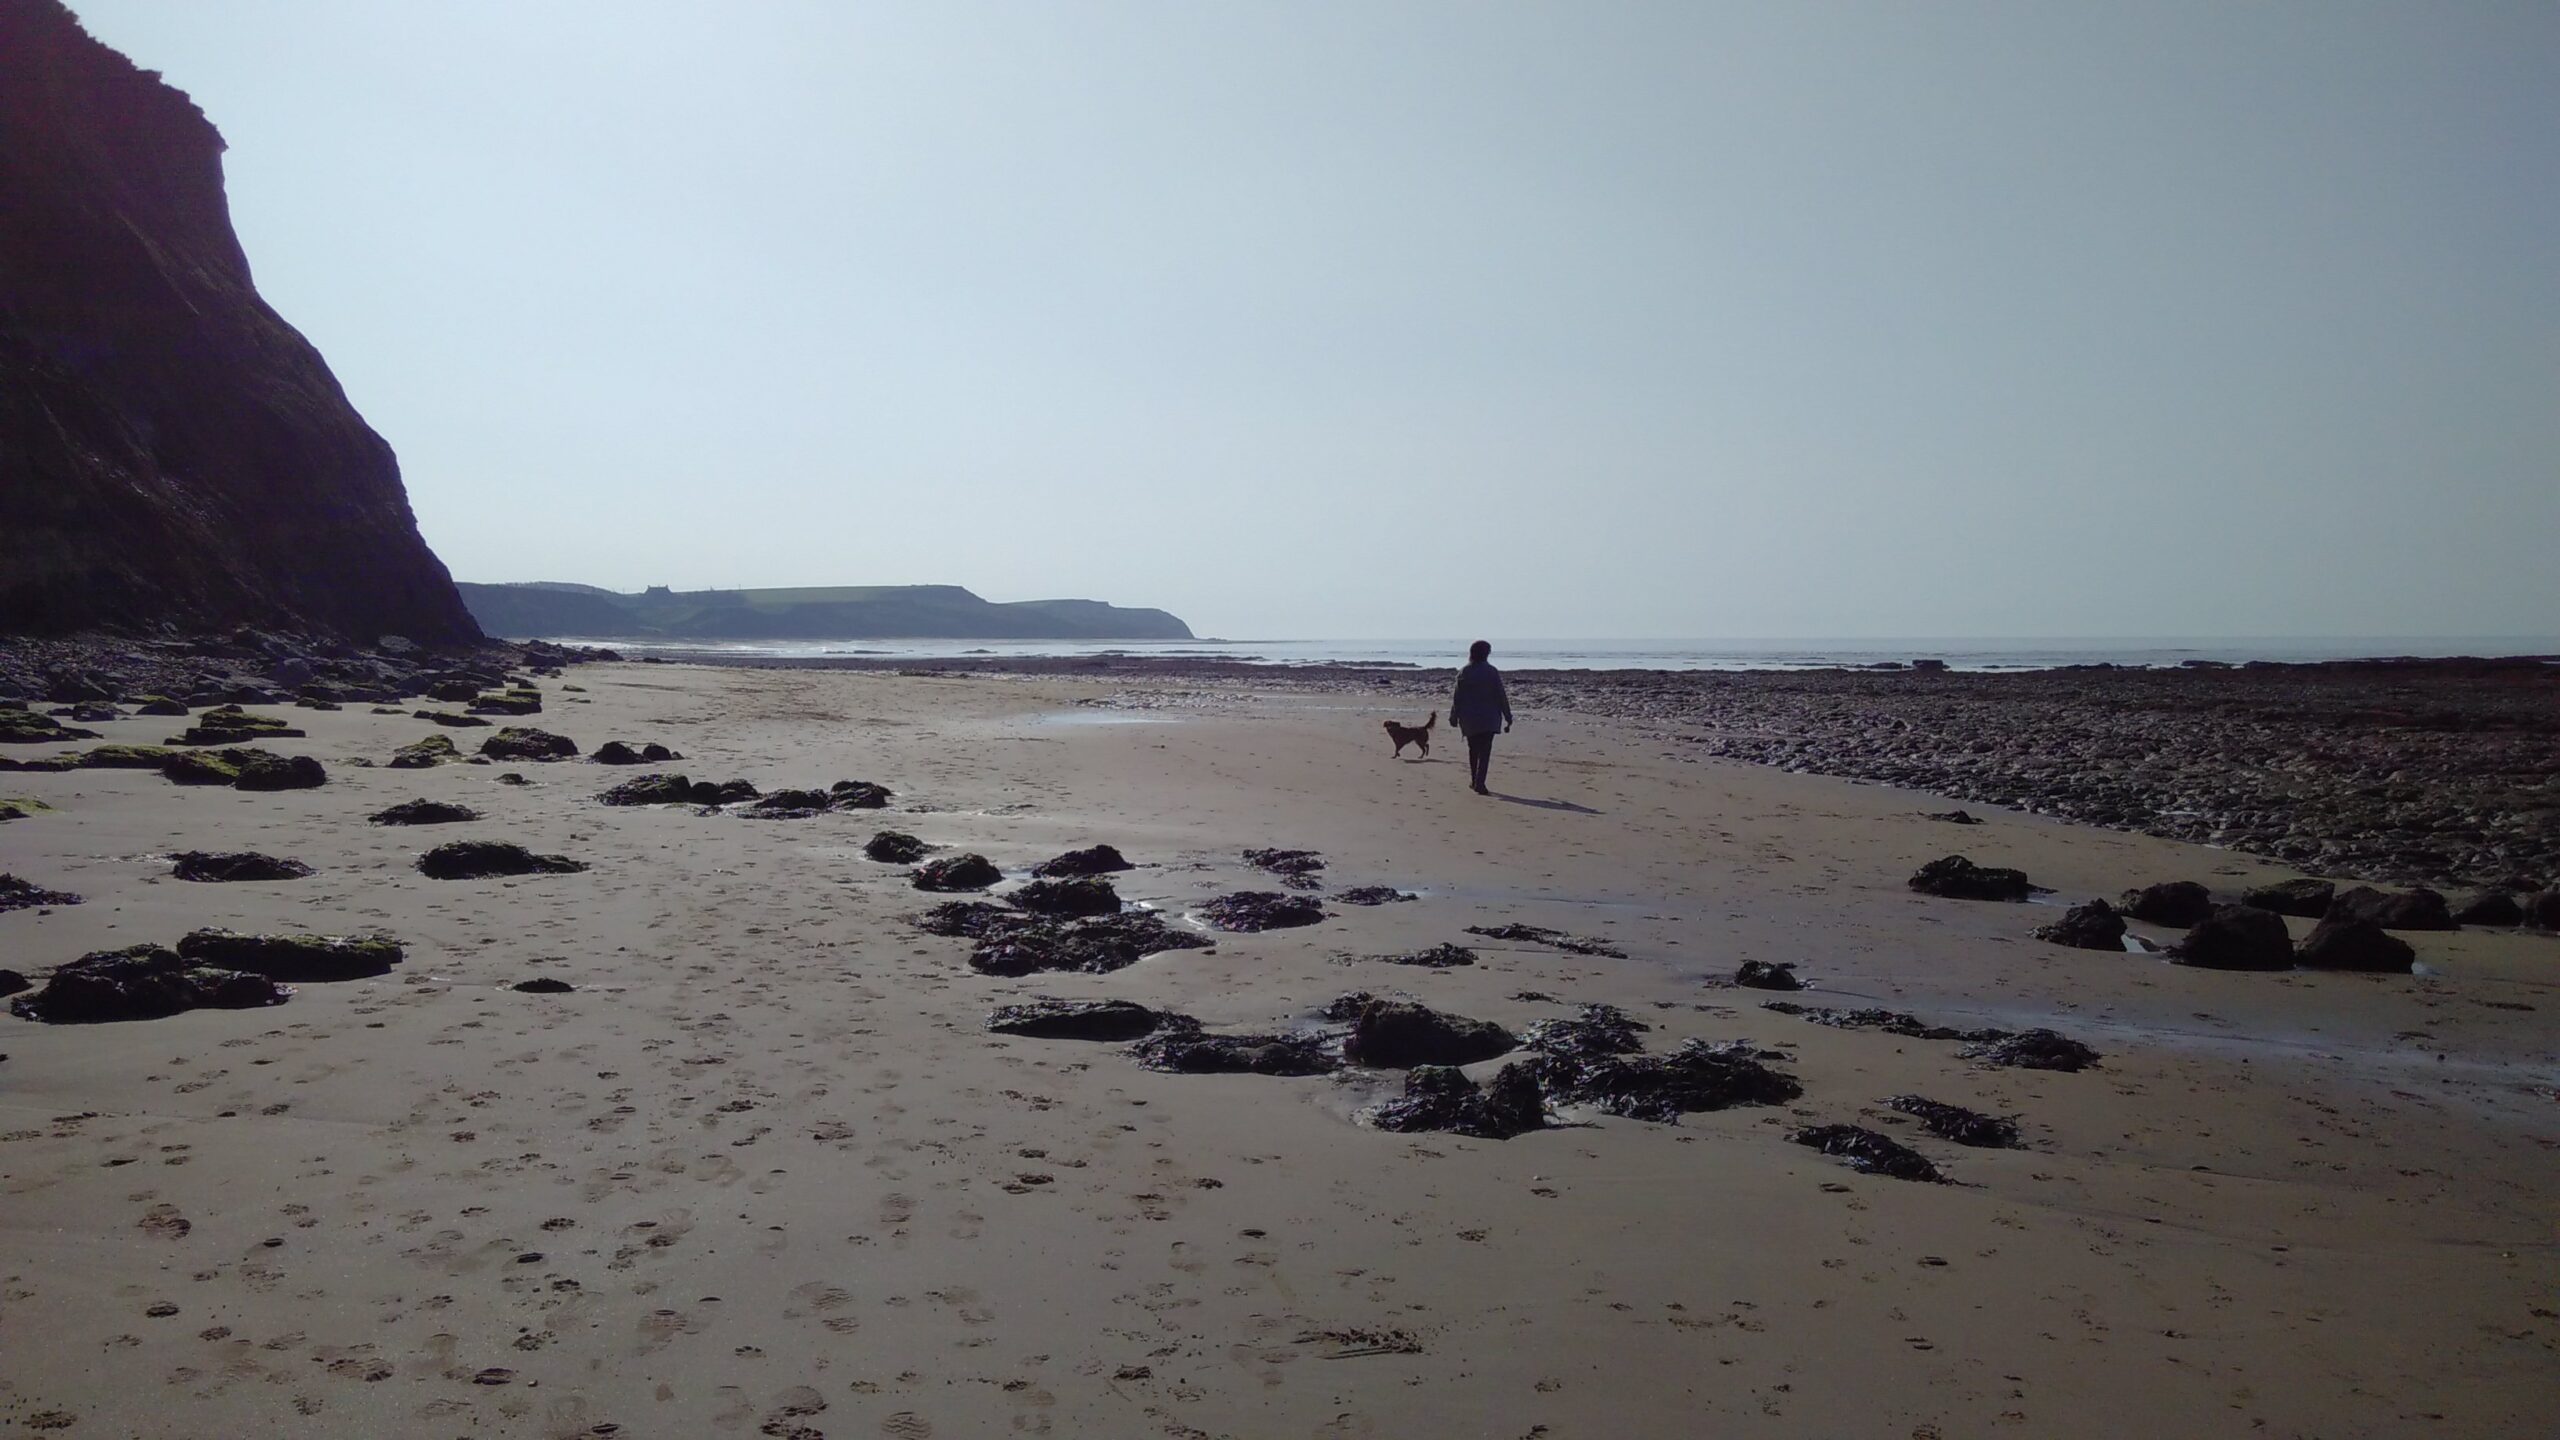 A woman and a dog walk on a broad sandy beach.